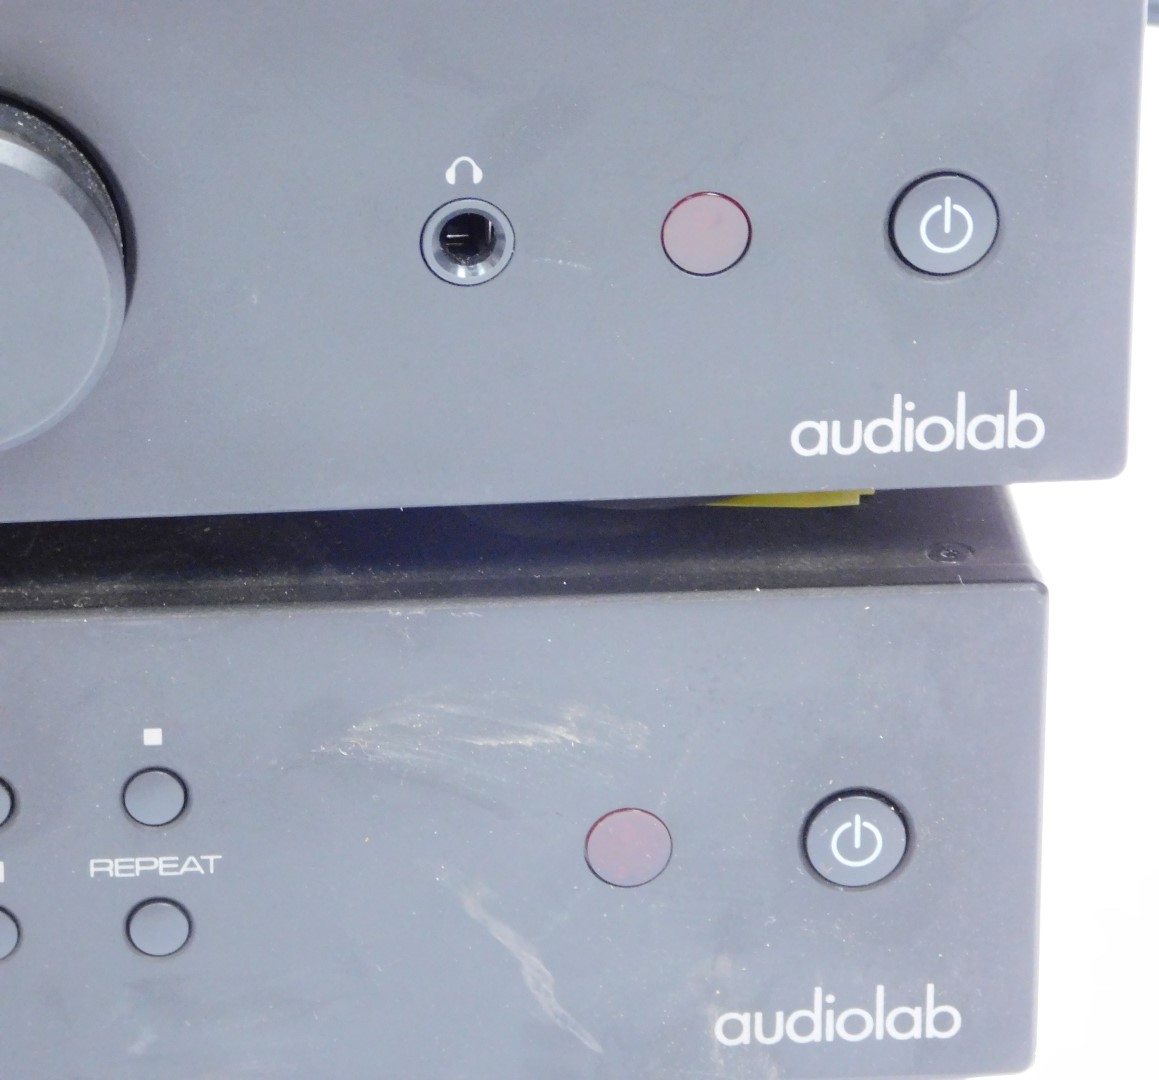 Audiolab hi-fi, comprising a 6000A and 6000CDT receiver, serial no AH007101CCA5355 and AH007801CJA57 - Image 3 of 4